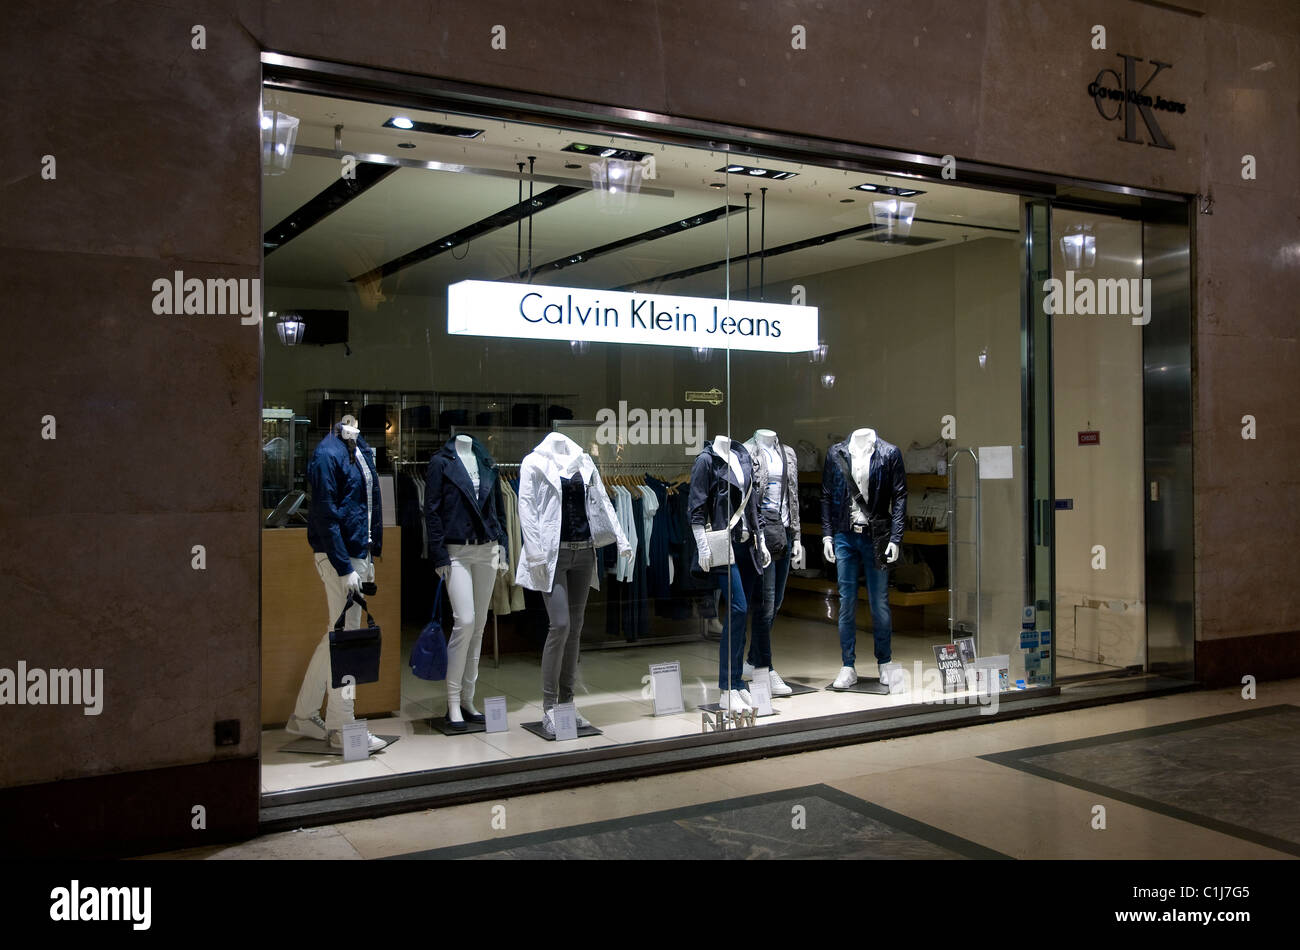 calvin klein jeans shop, turin, italy Stock Photo - Alamy